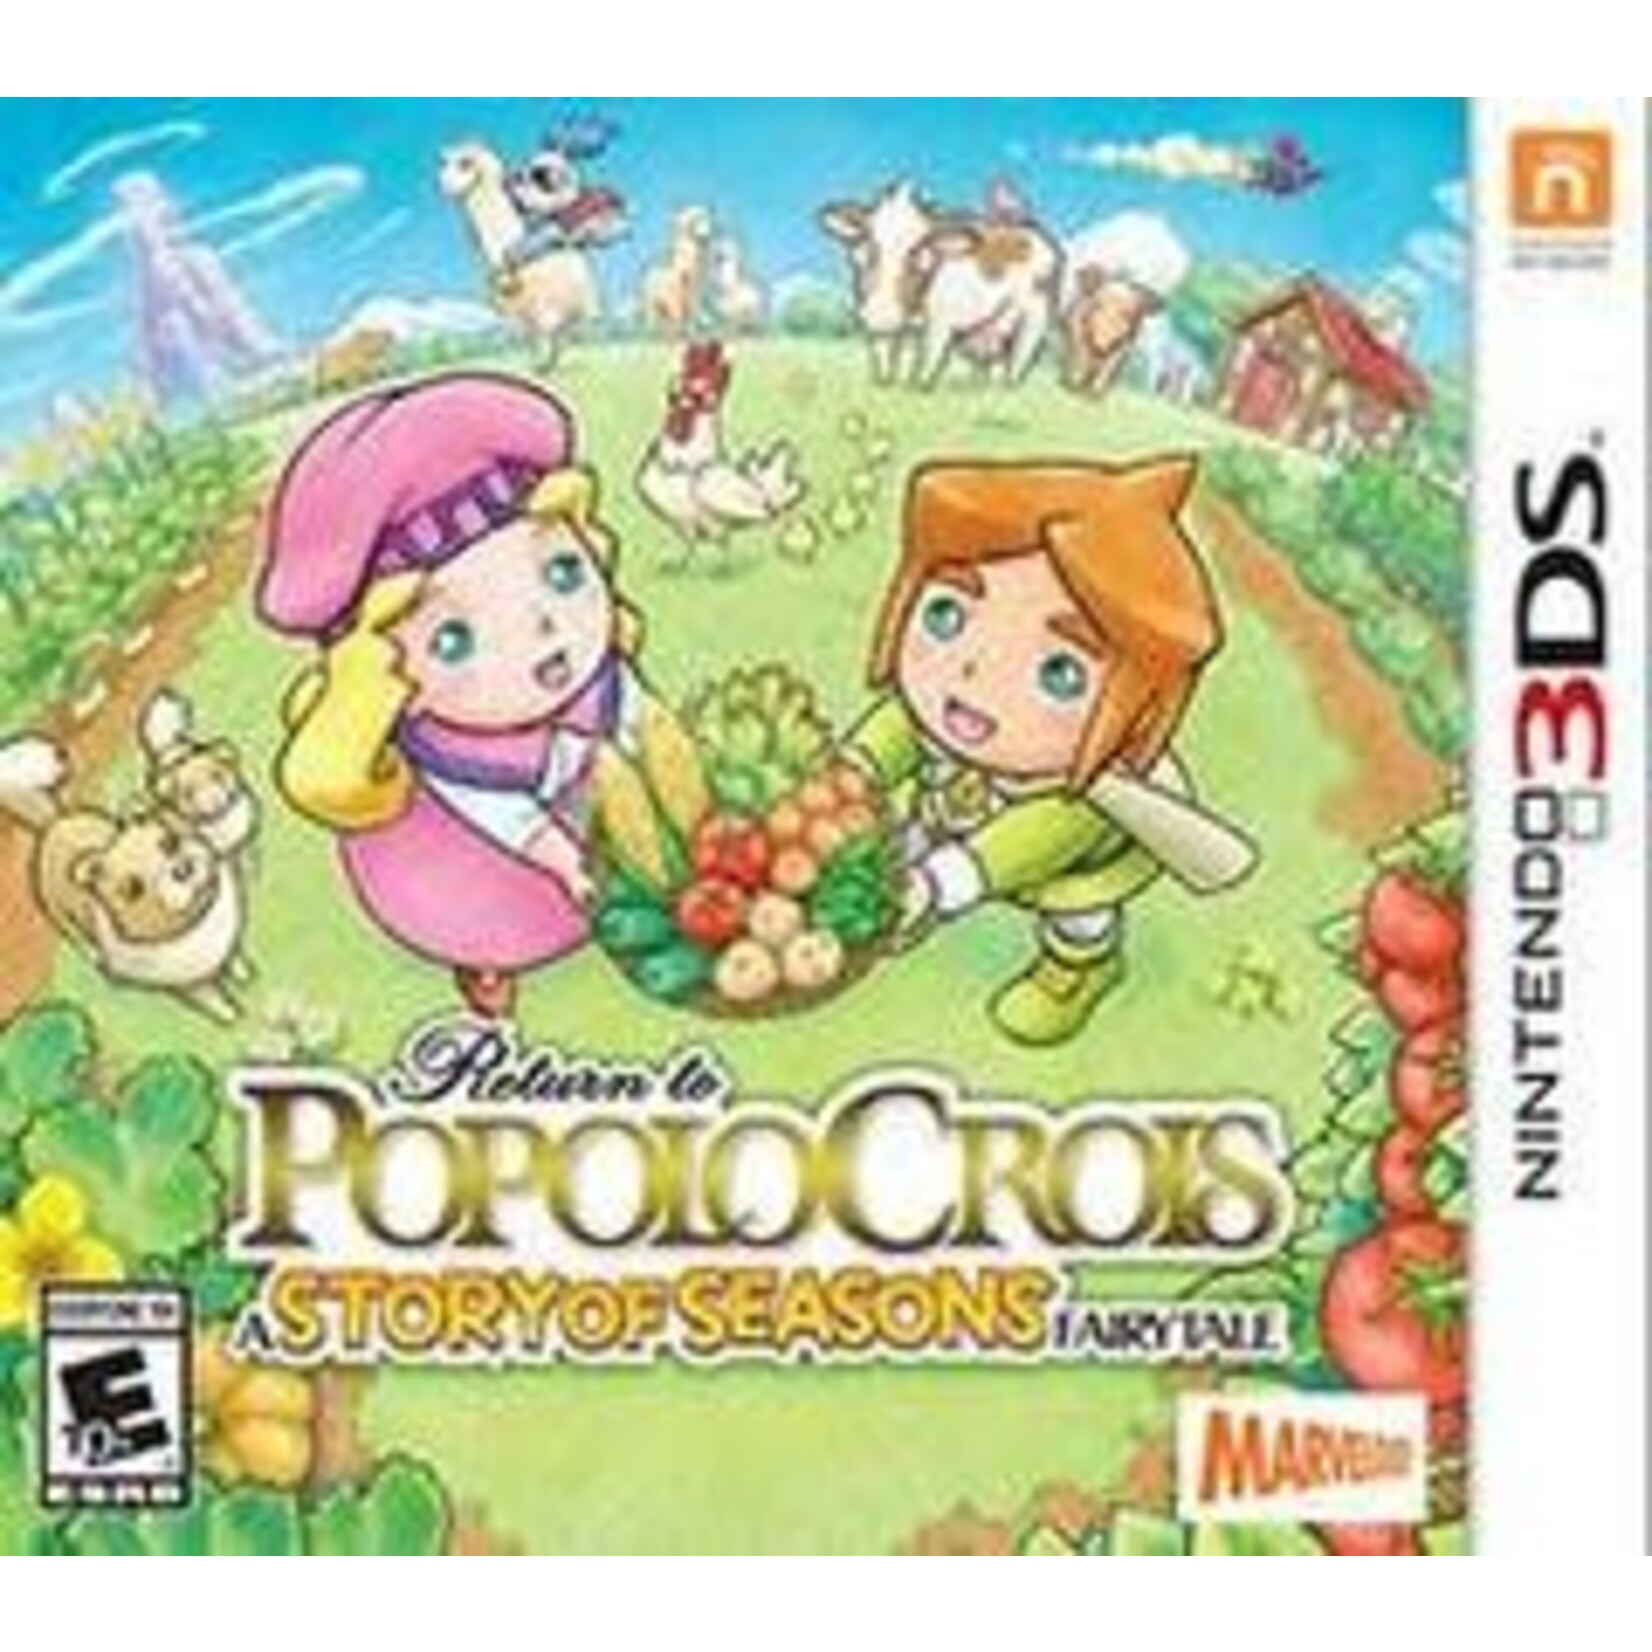 3dsu-Return to PopoloCrois A Story of Seasons Fairy Tale